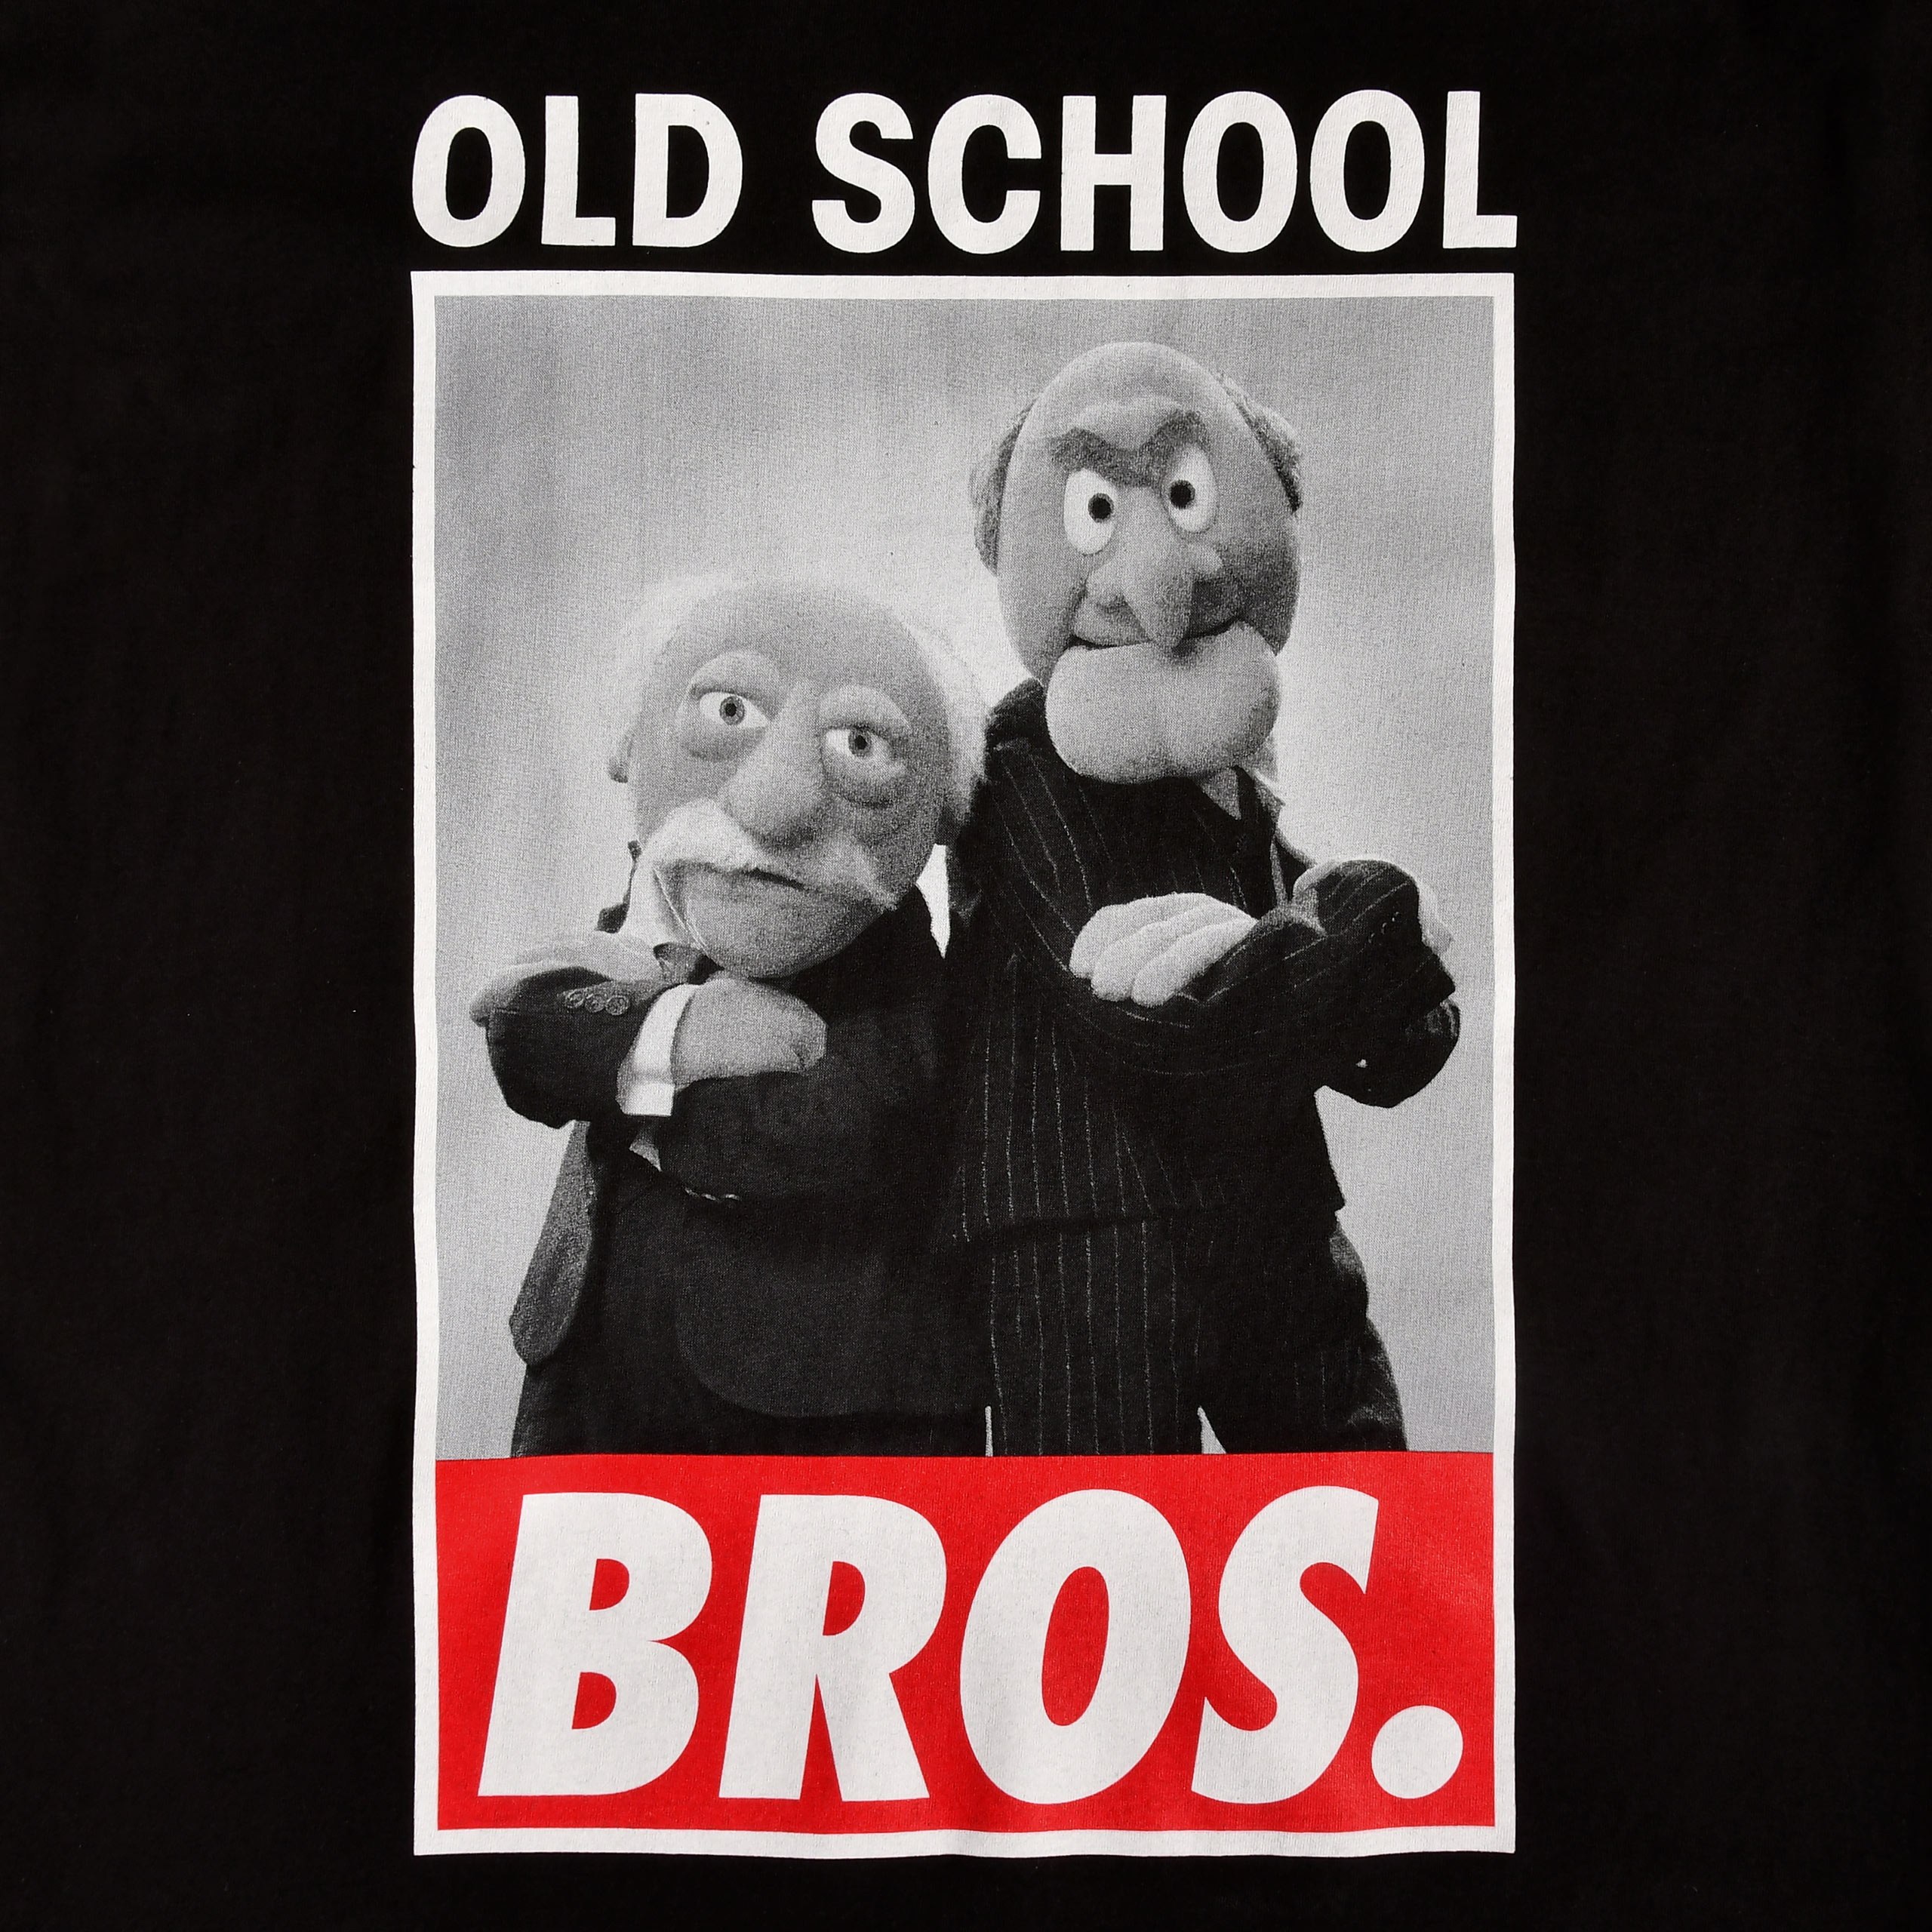 Muppets - Old School Bros. T-Shirt black